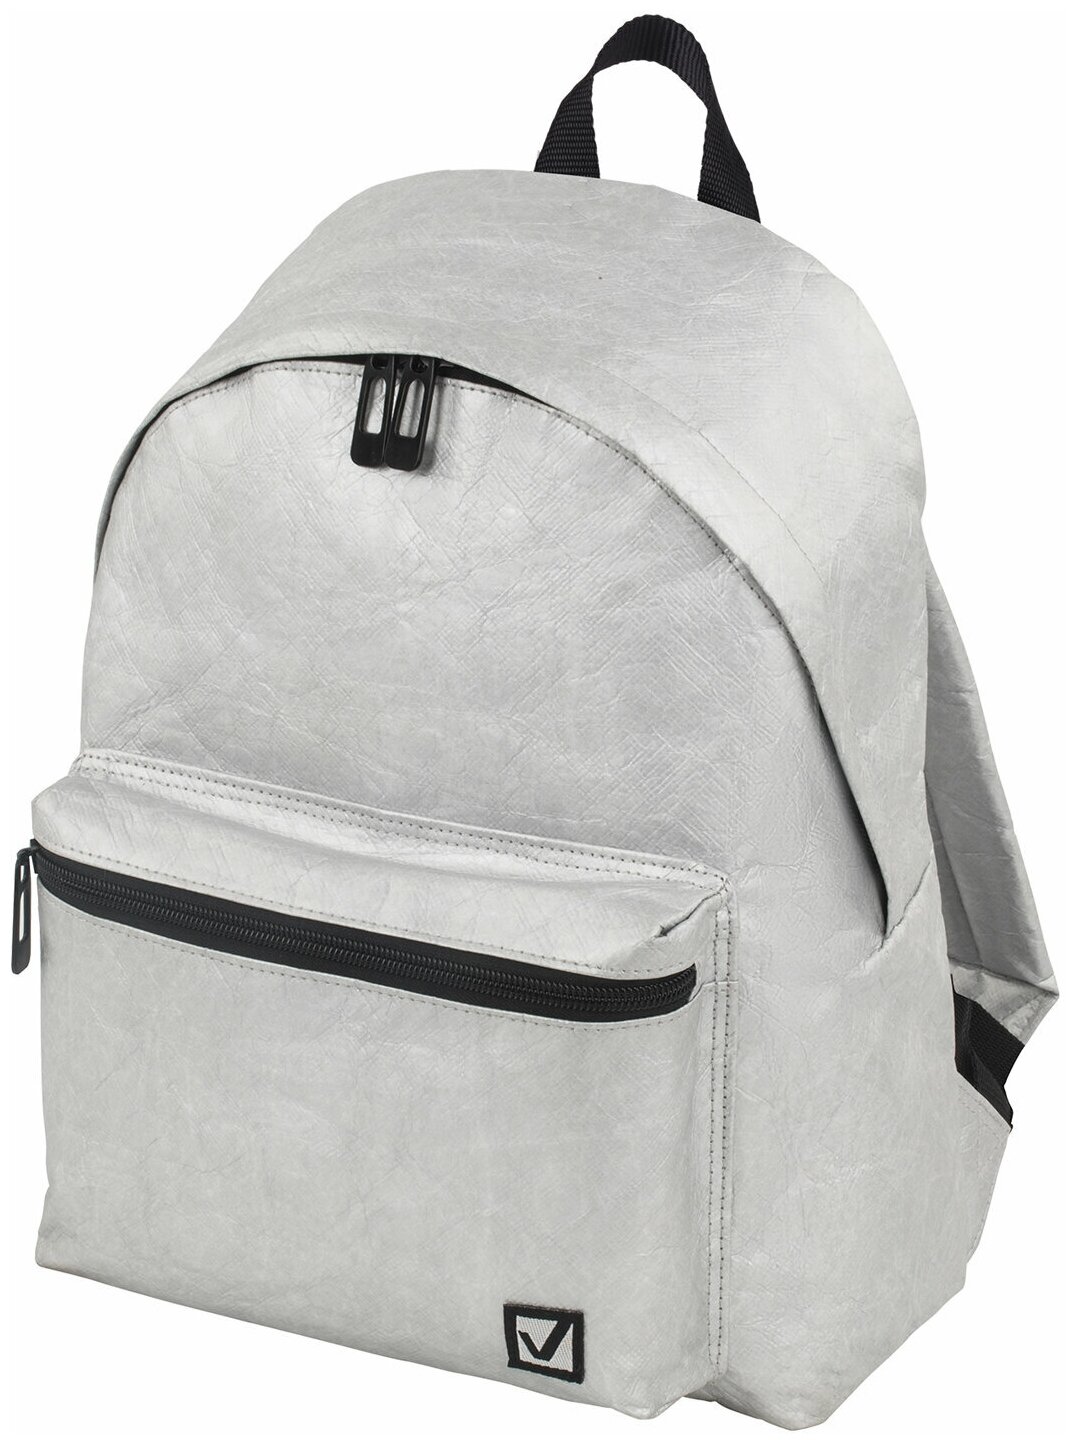 Рюкзак крафтовый Brauberg Miracle, с водонепроницаемым покрытием, серебристый, 34х26х11 см (229891)